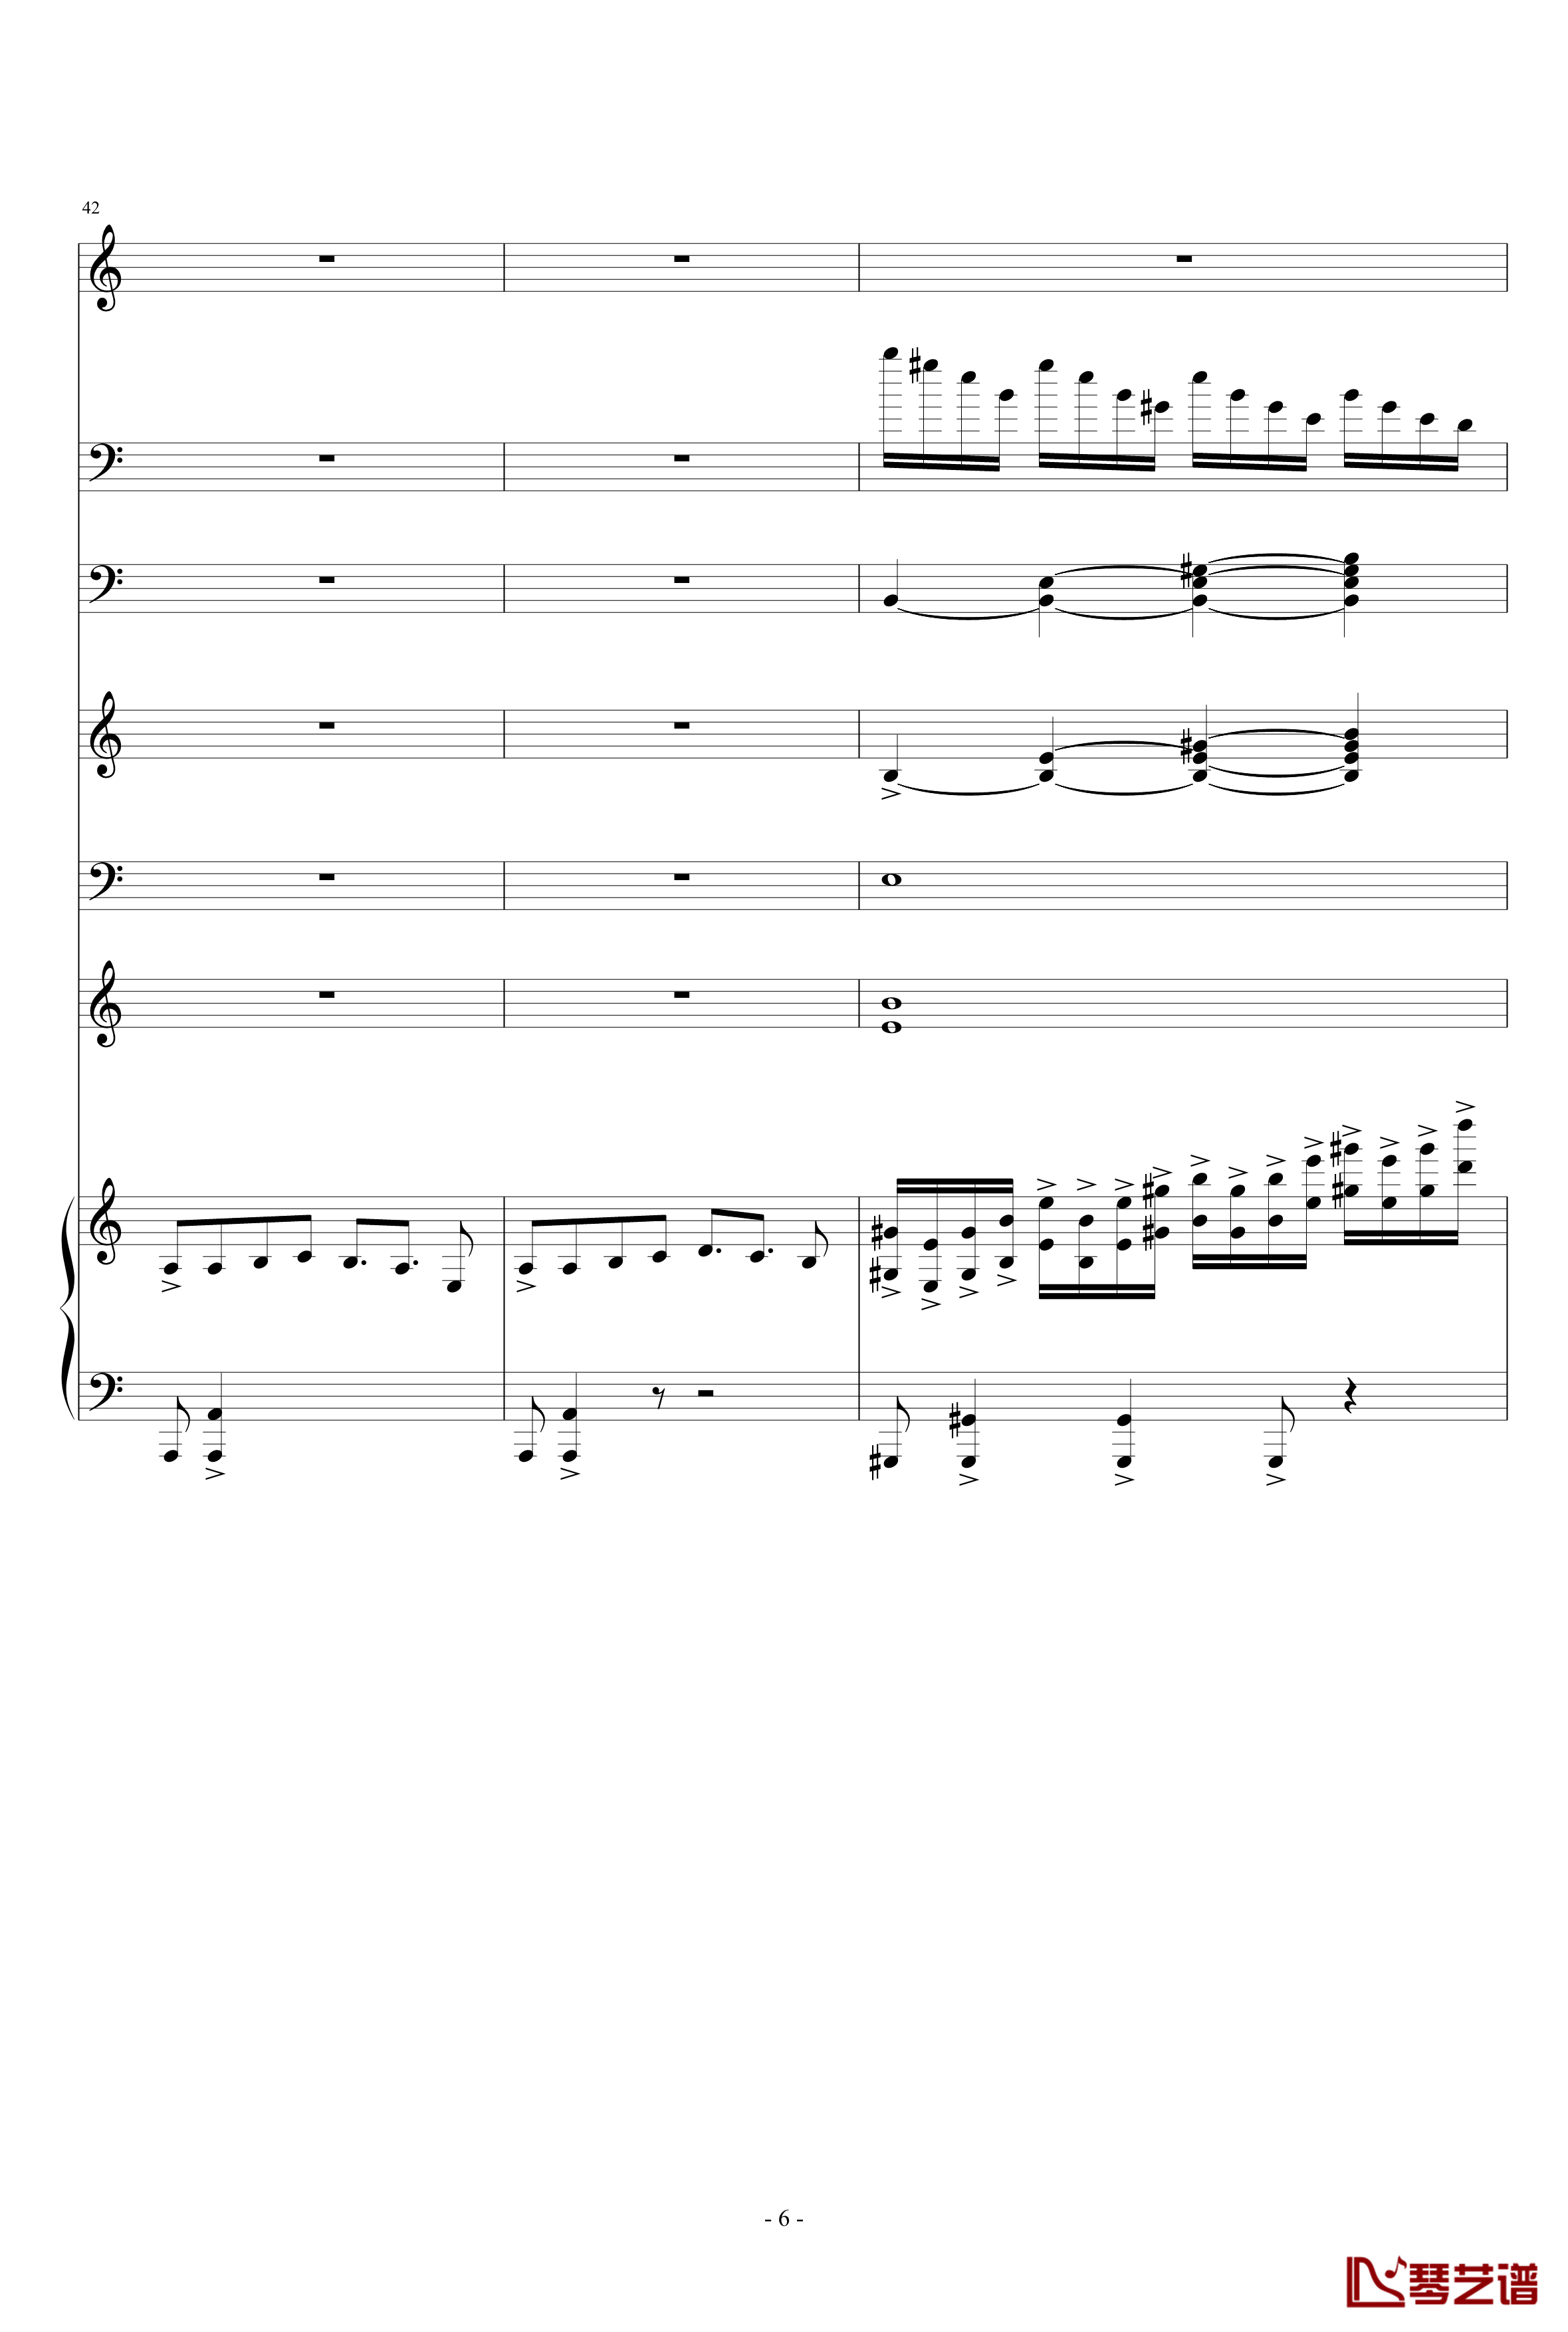 Raining heart钢琴谱-Gicco6